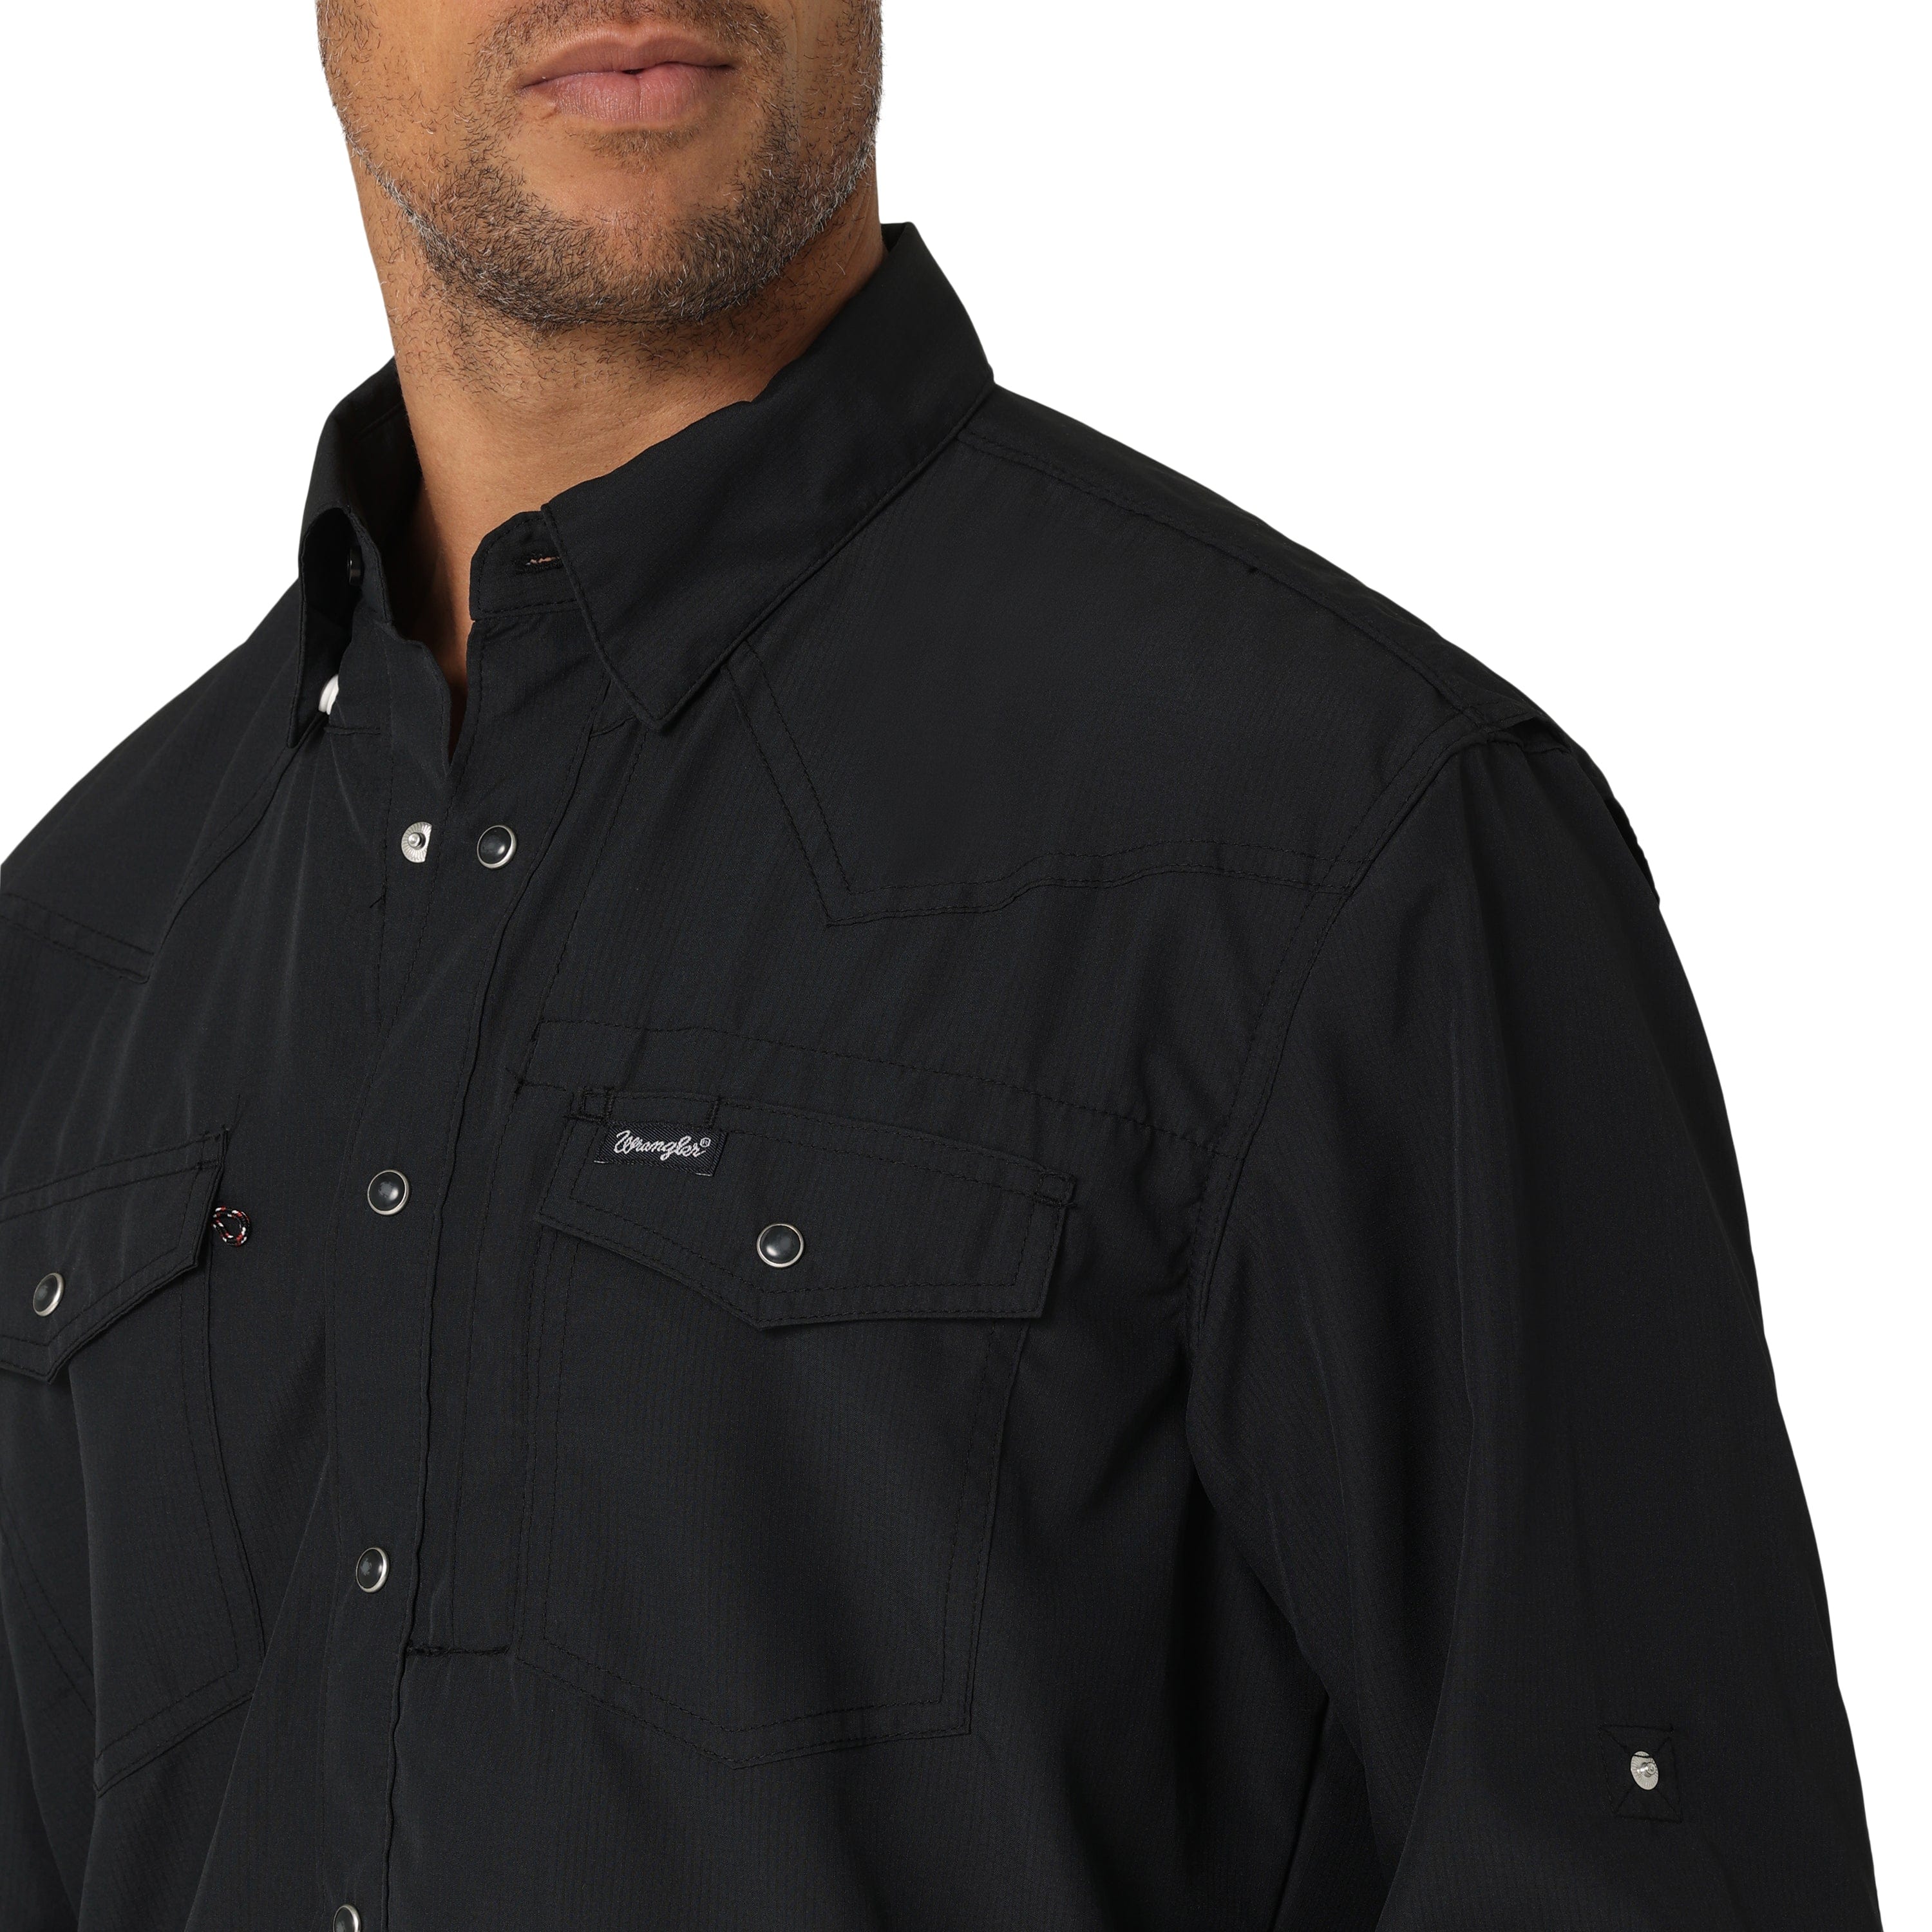 Wrangler Long Sleeve Western Shirt